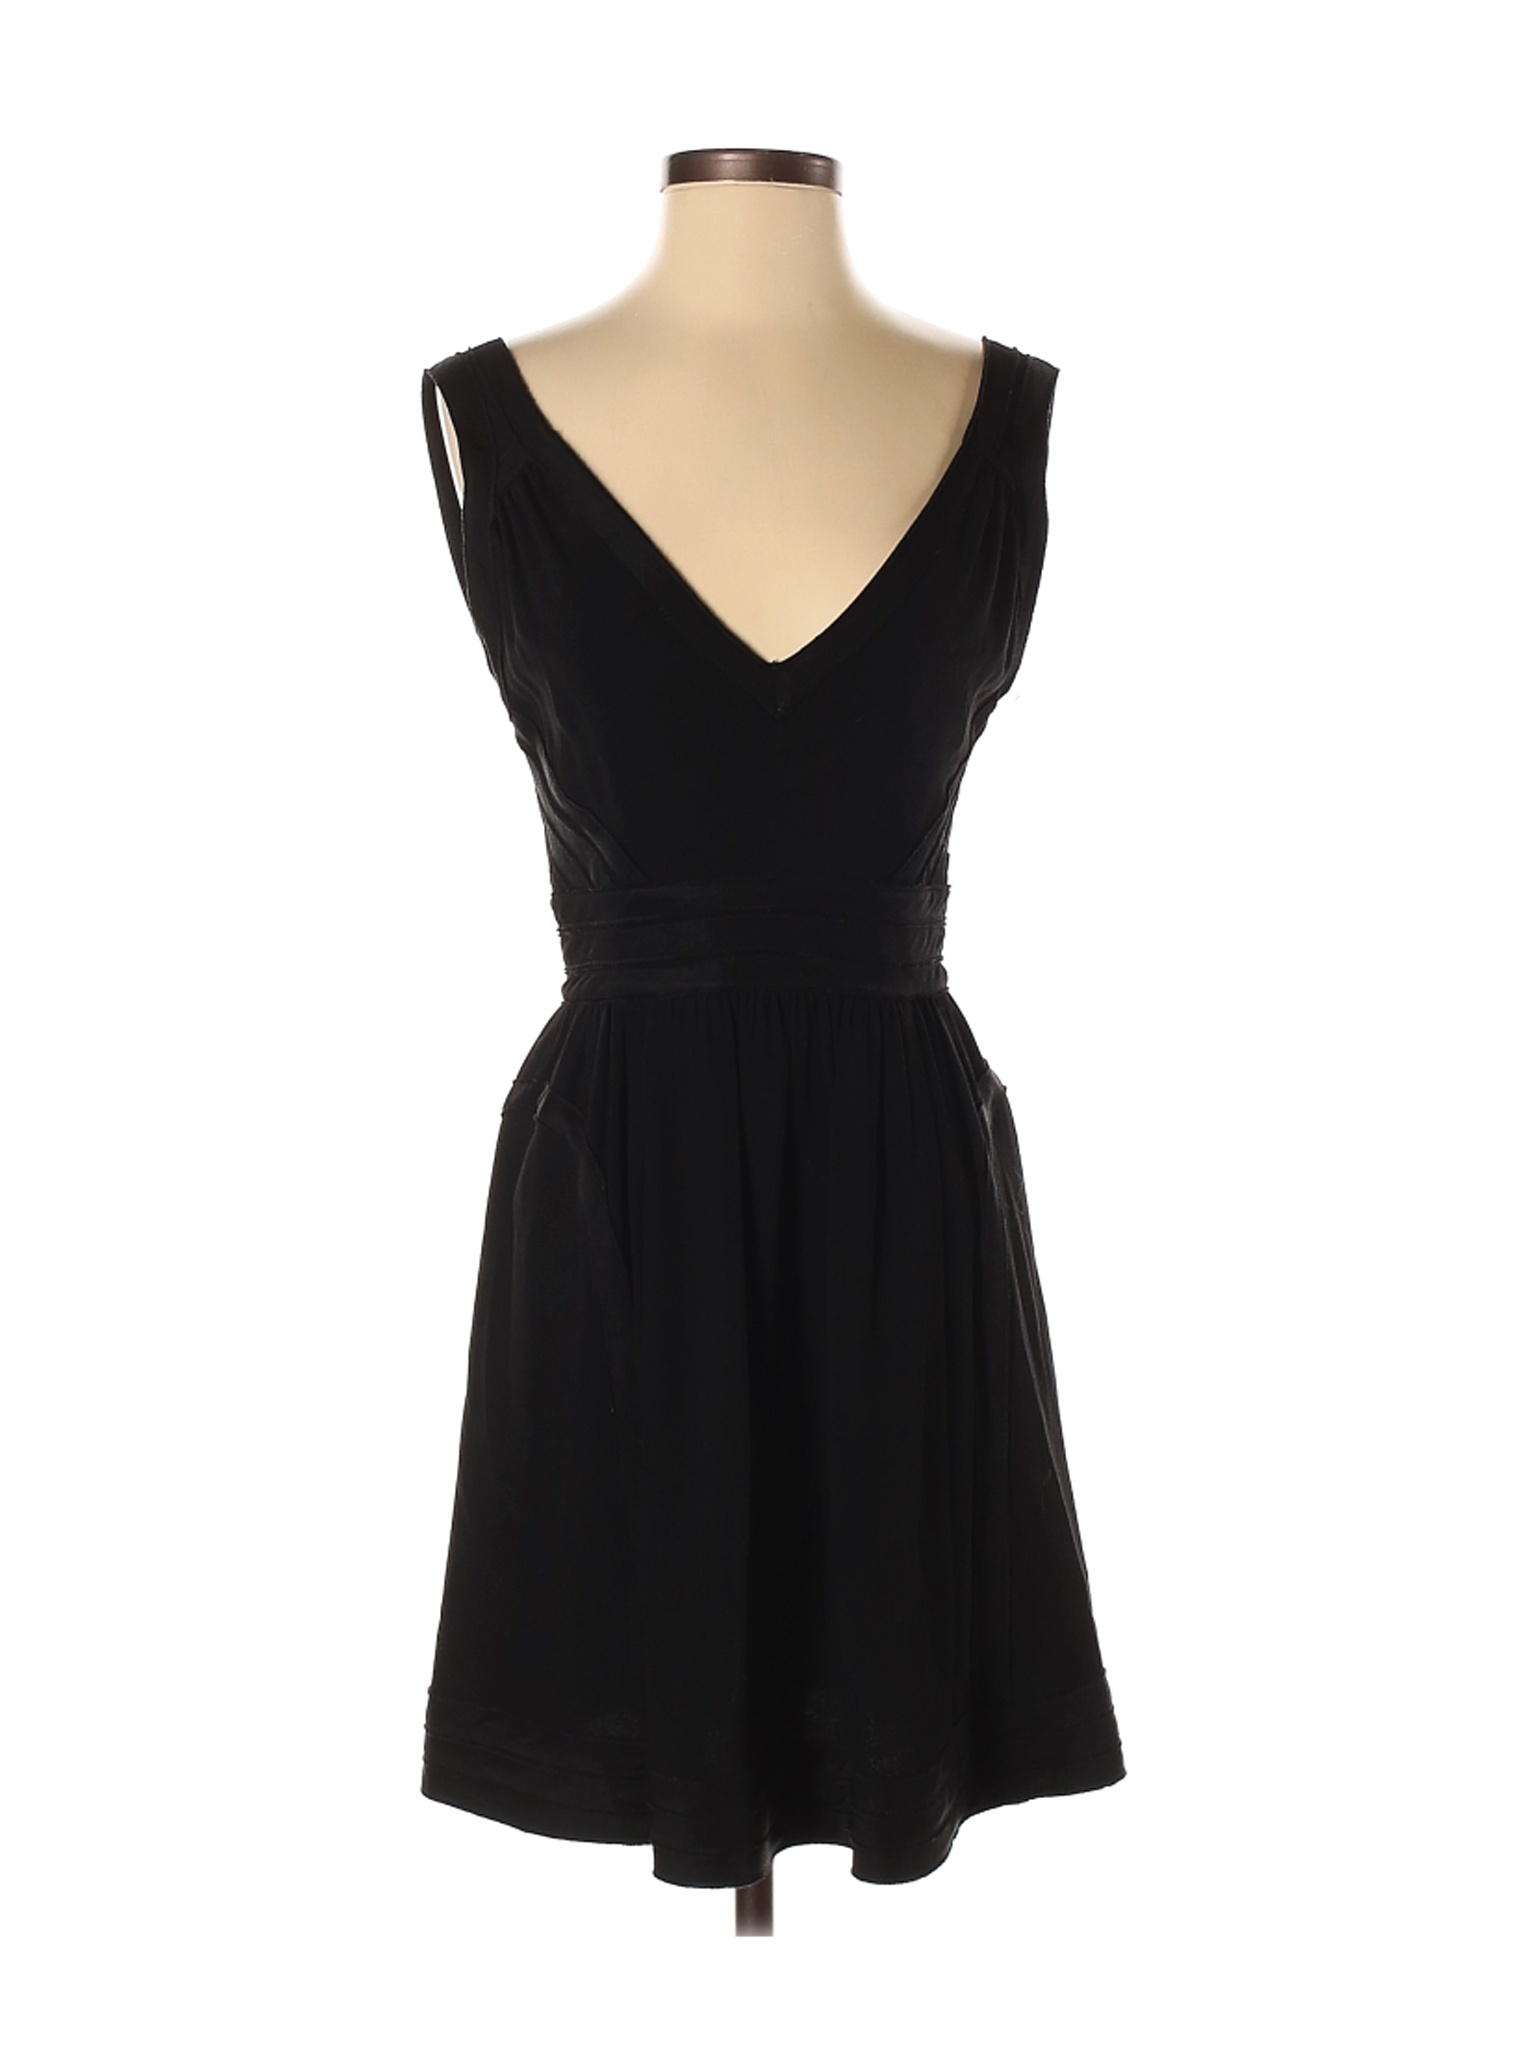 Maje Women Black Cocktail Dress S | eBay